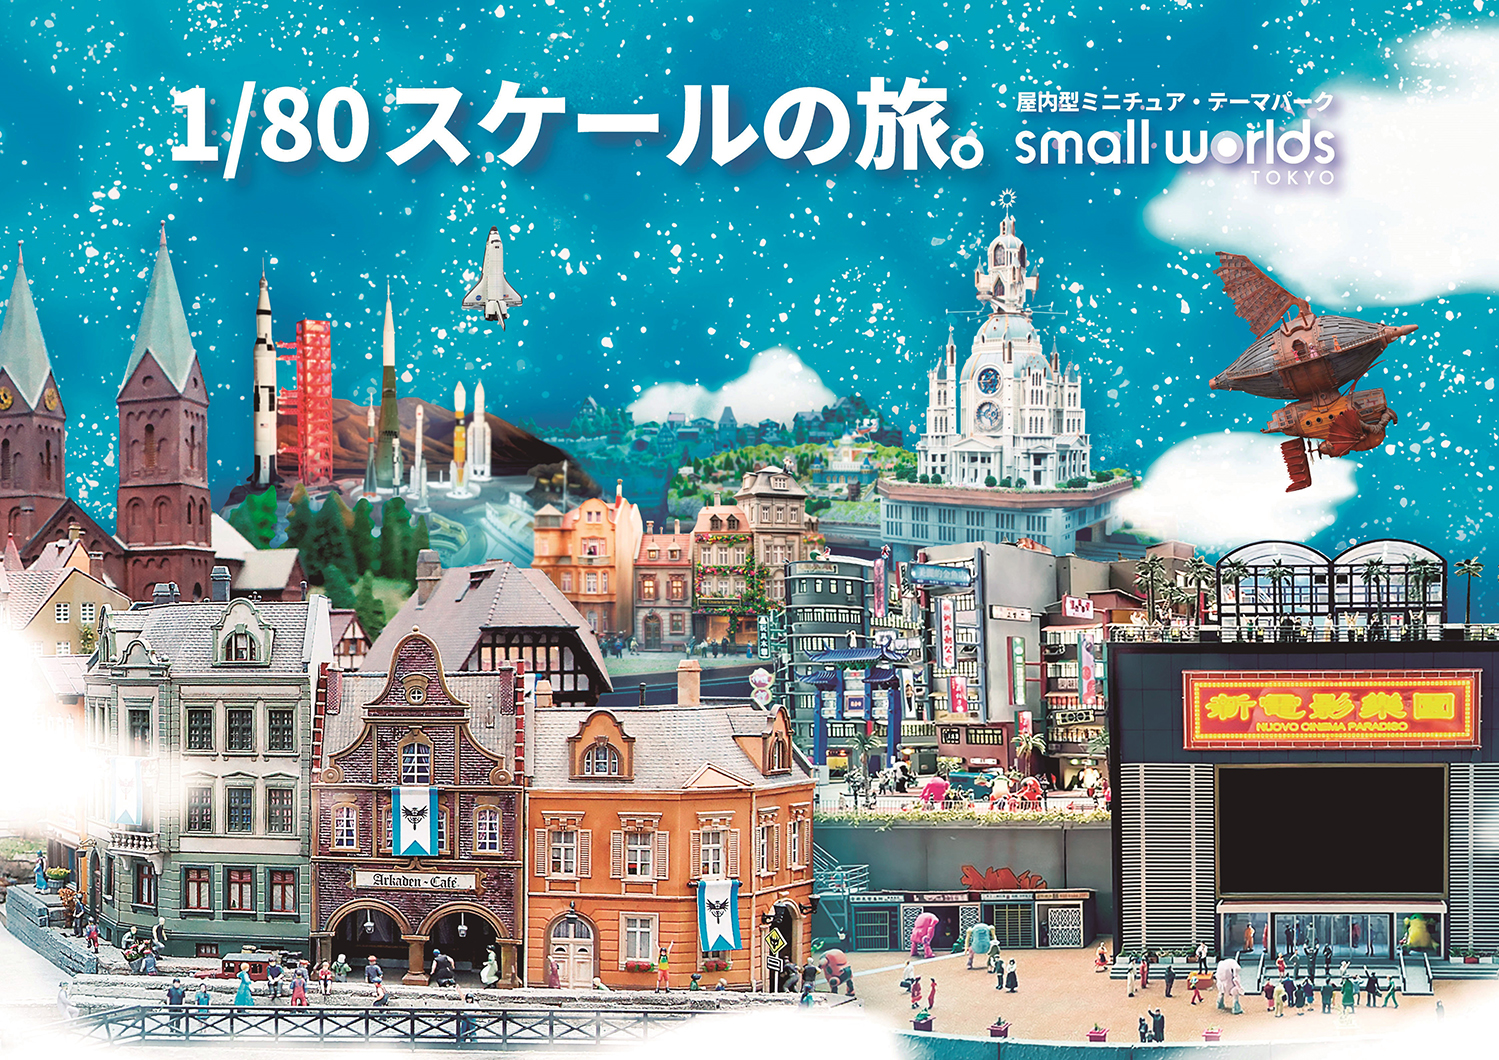 SMALL WORLDS TOKYO